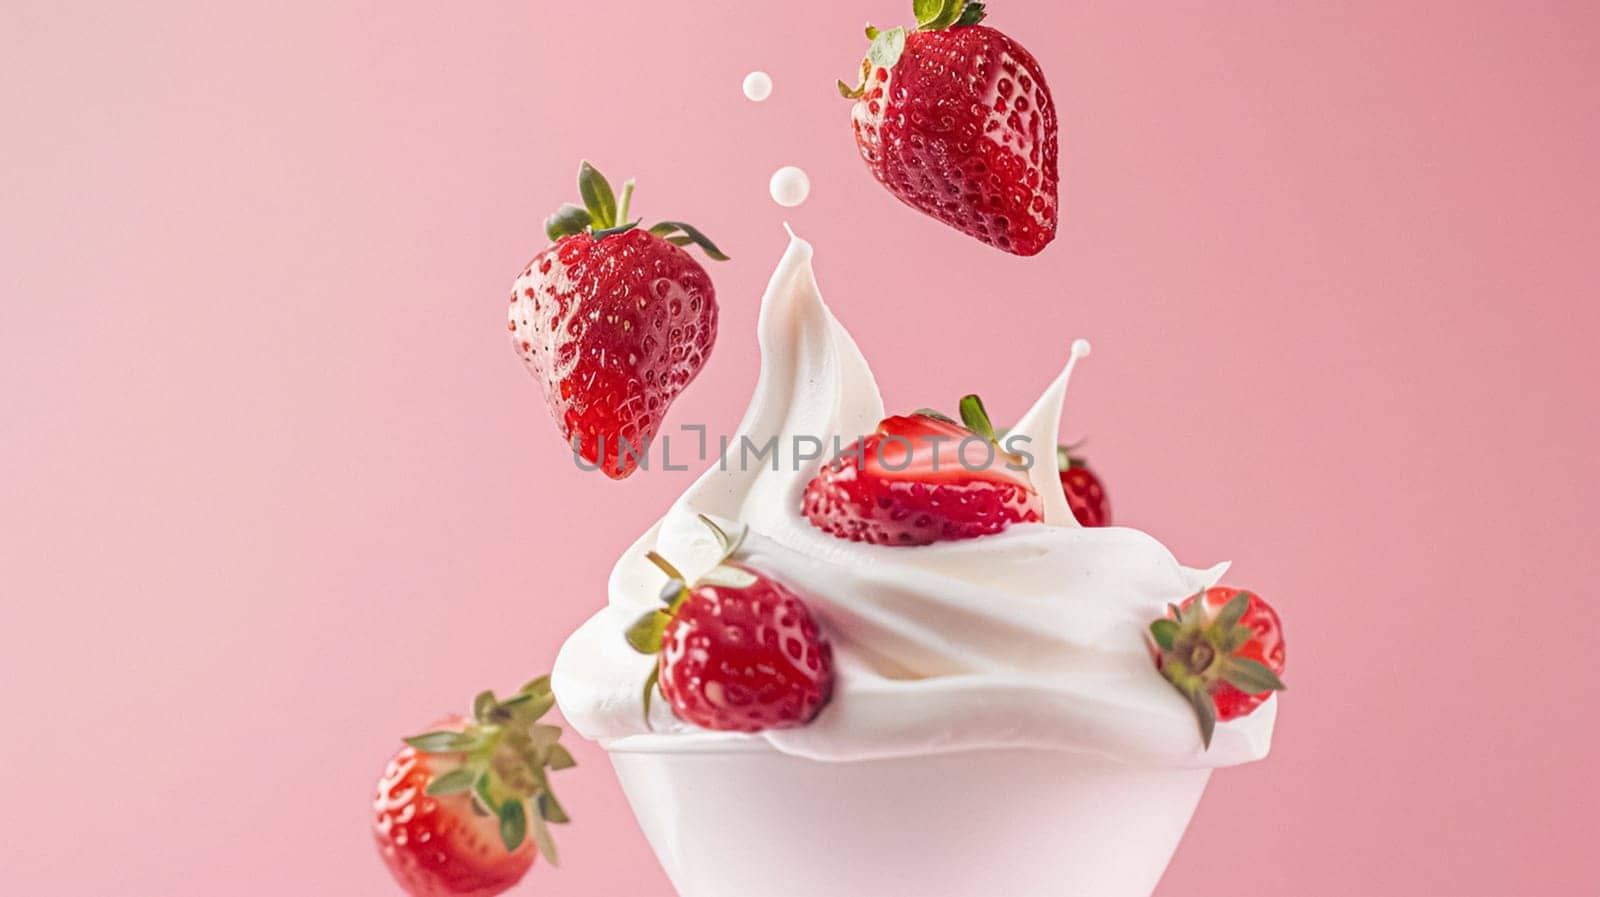 Strawberries falling into cream, milk or yoghurt on pink background, strawberry dessert by Anneleven